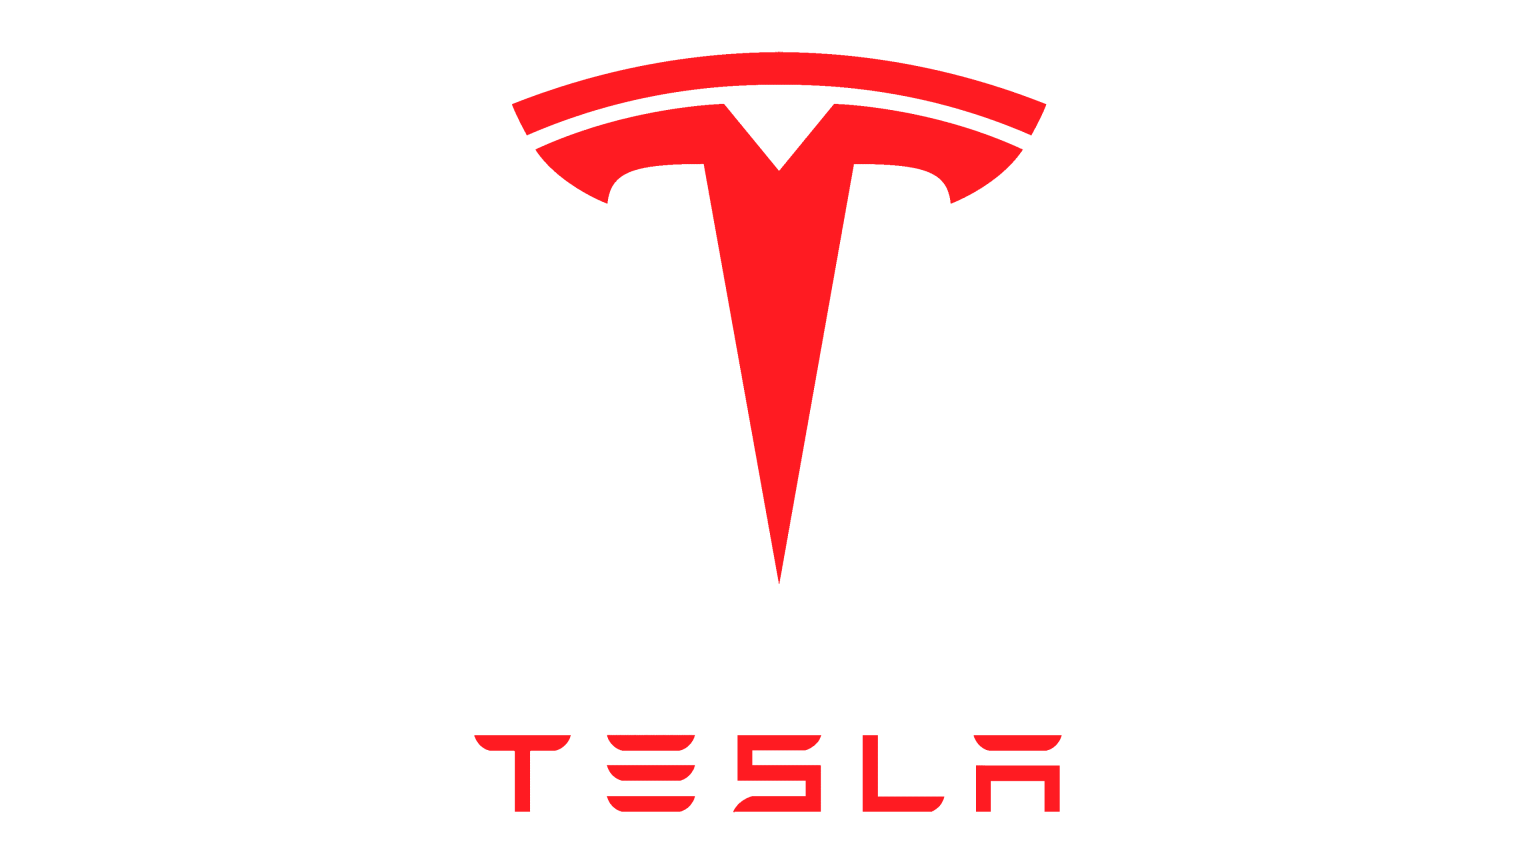 Tesla Logo and Car Symbol Meaning